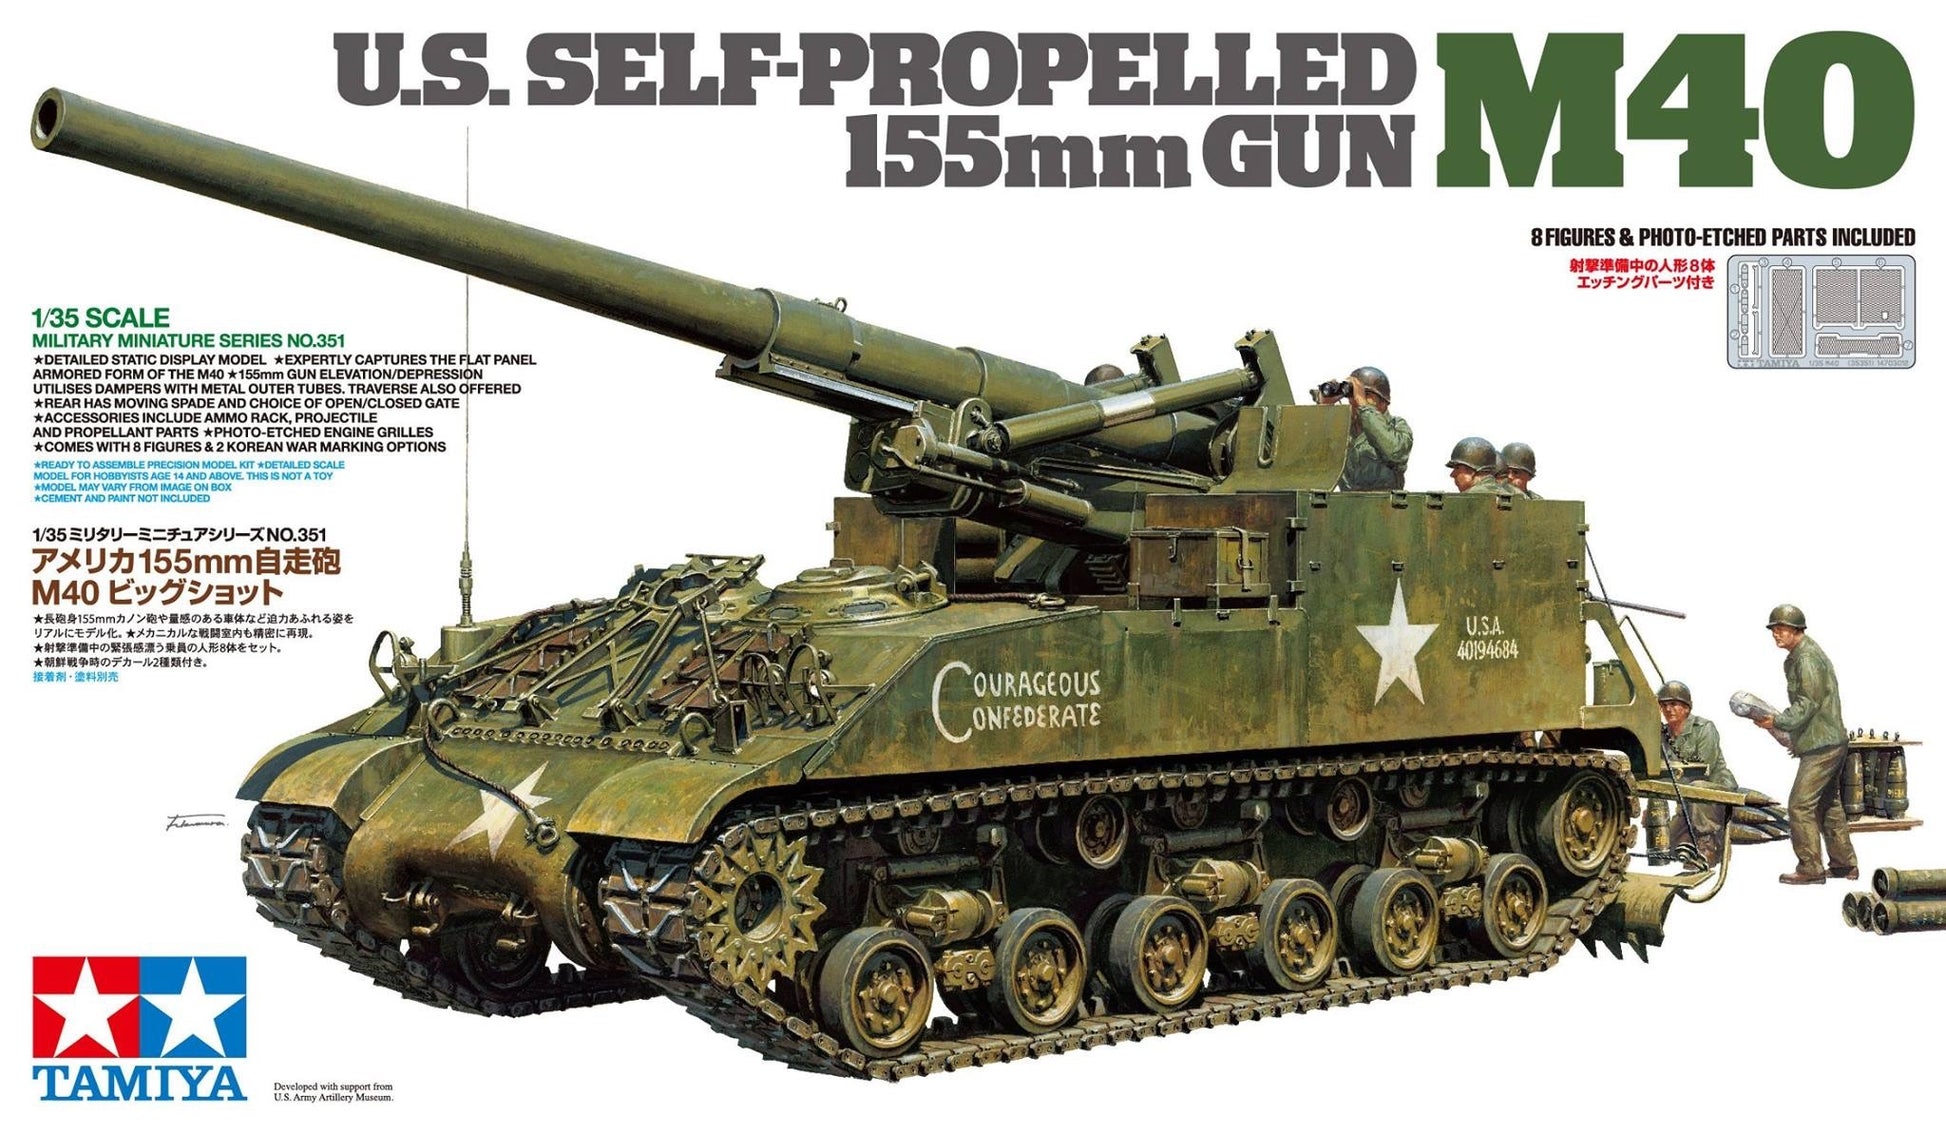 US Self-Propelled 155mm Gun M40